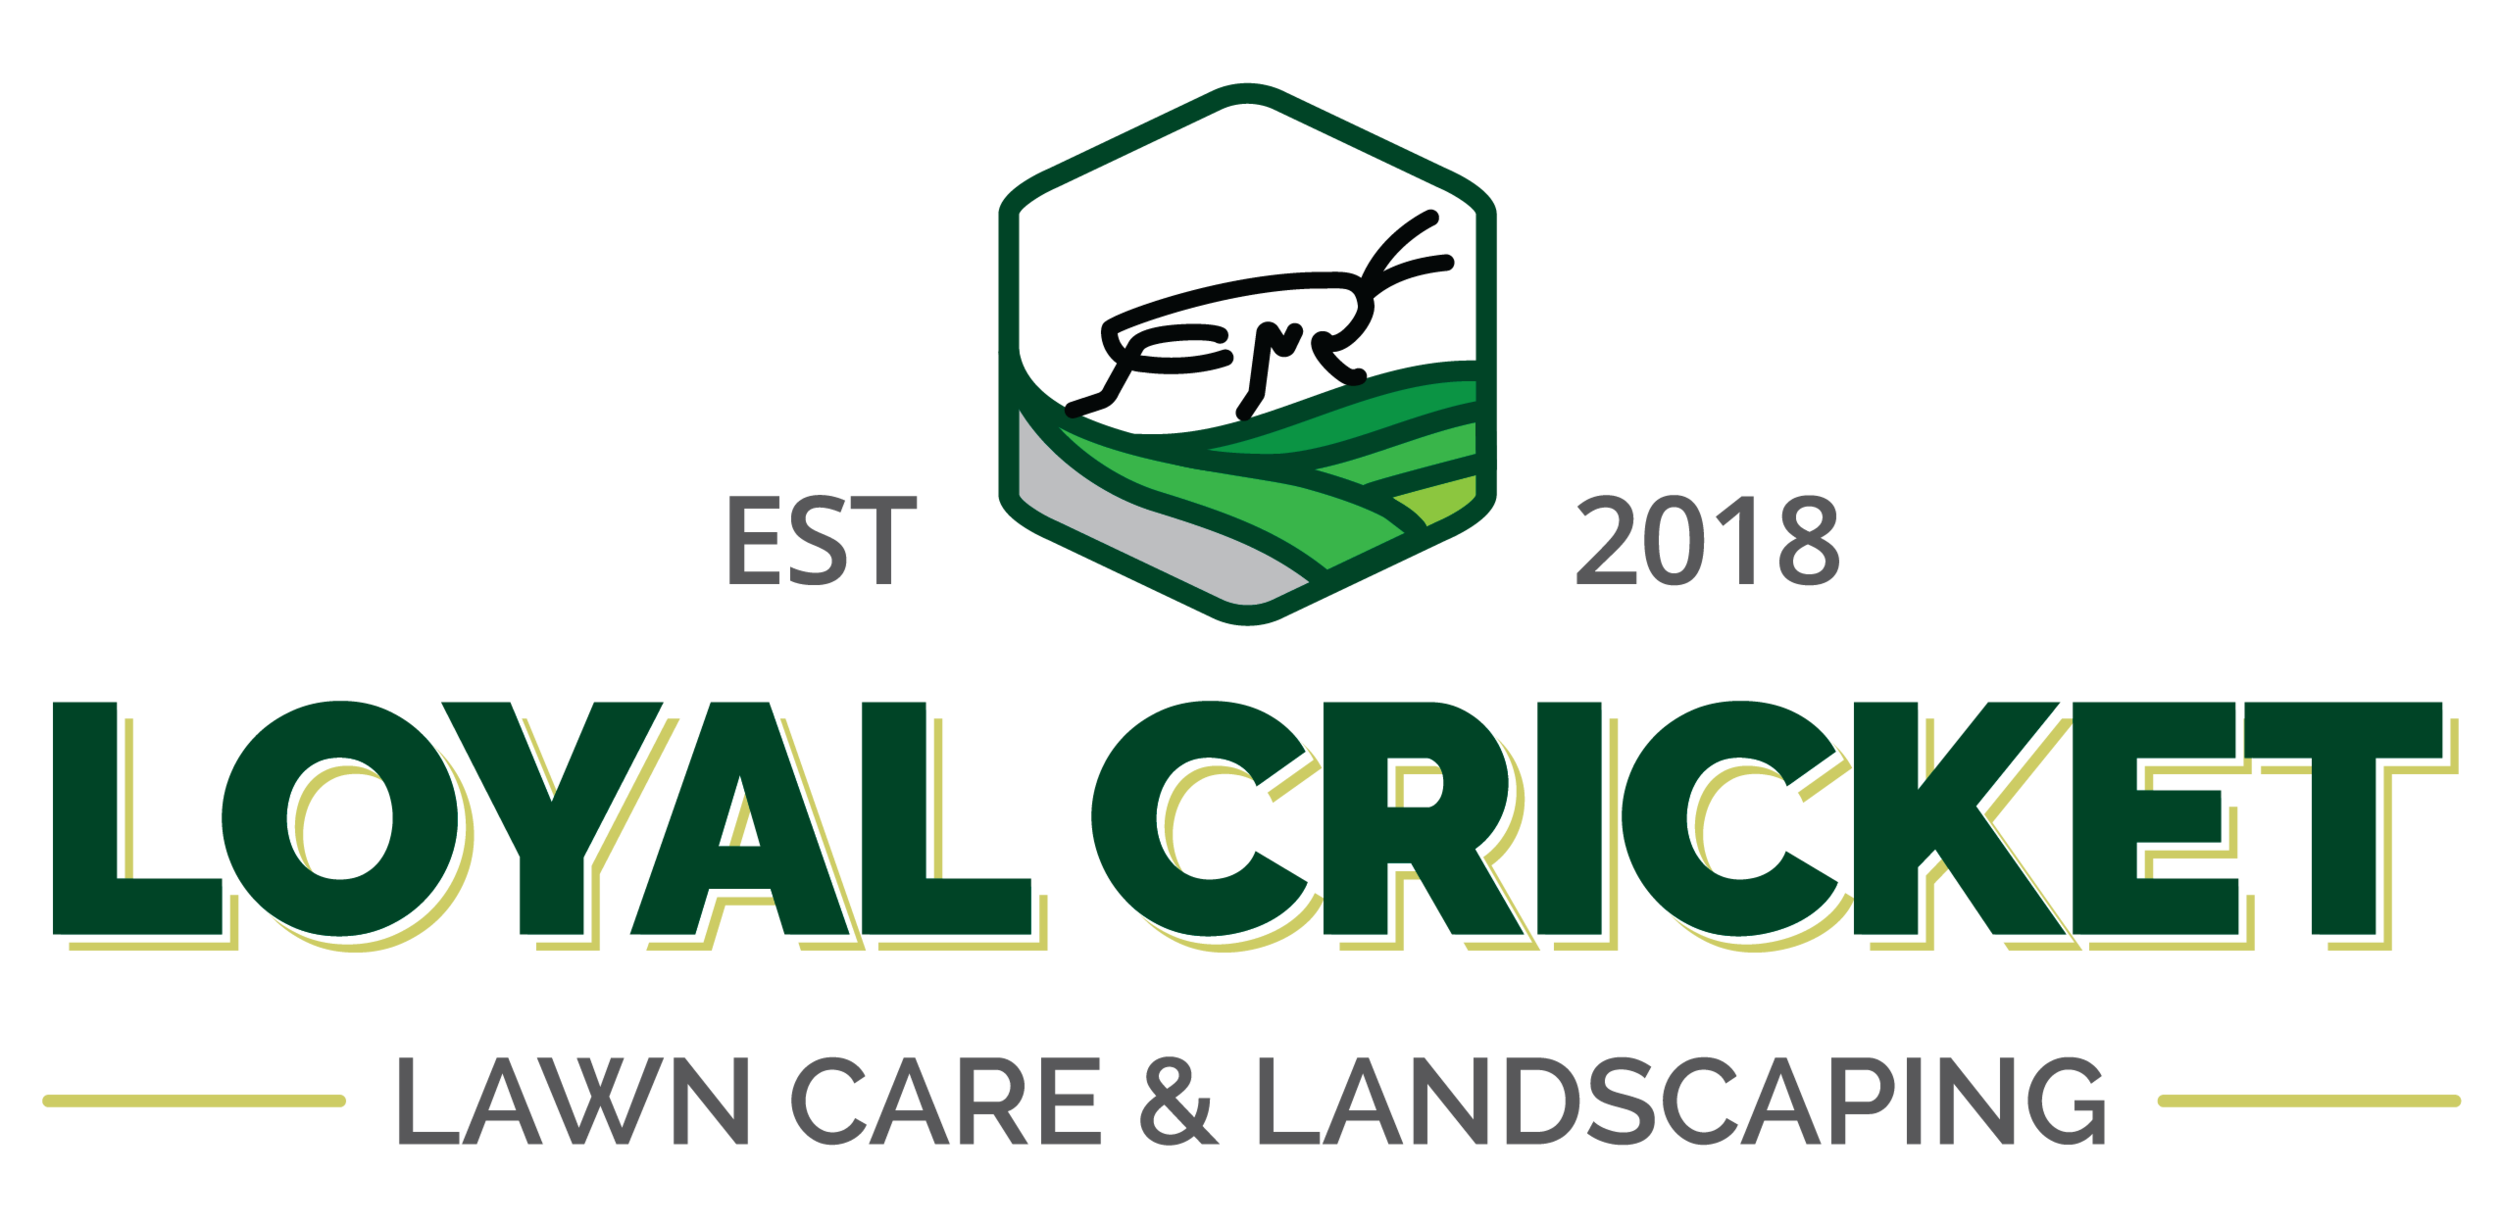 Loyal Cricket Lawn Care &amp; Landscaping Services in Regina, Lumsden, Regina Beach &amp; area